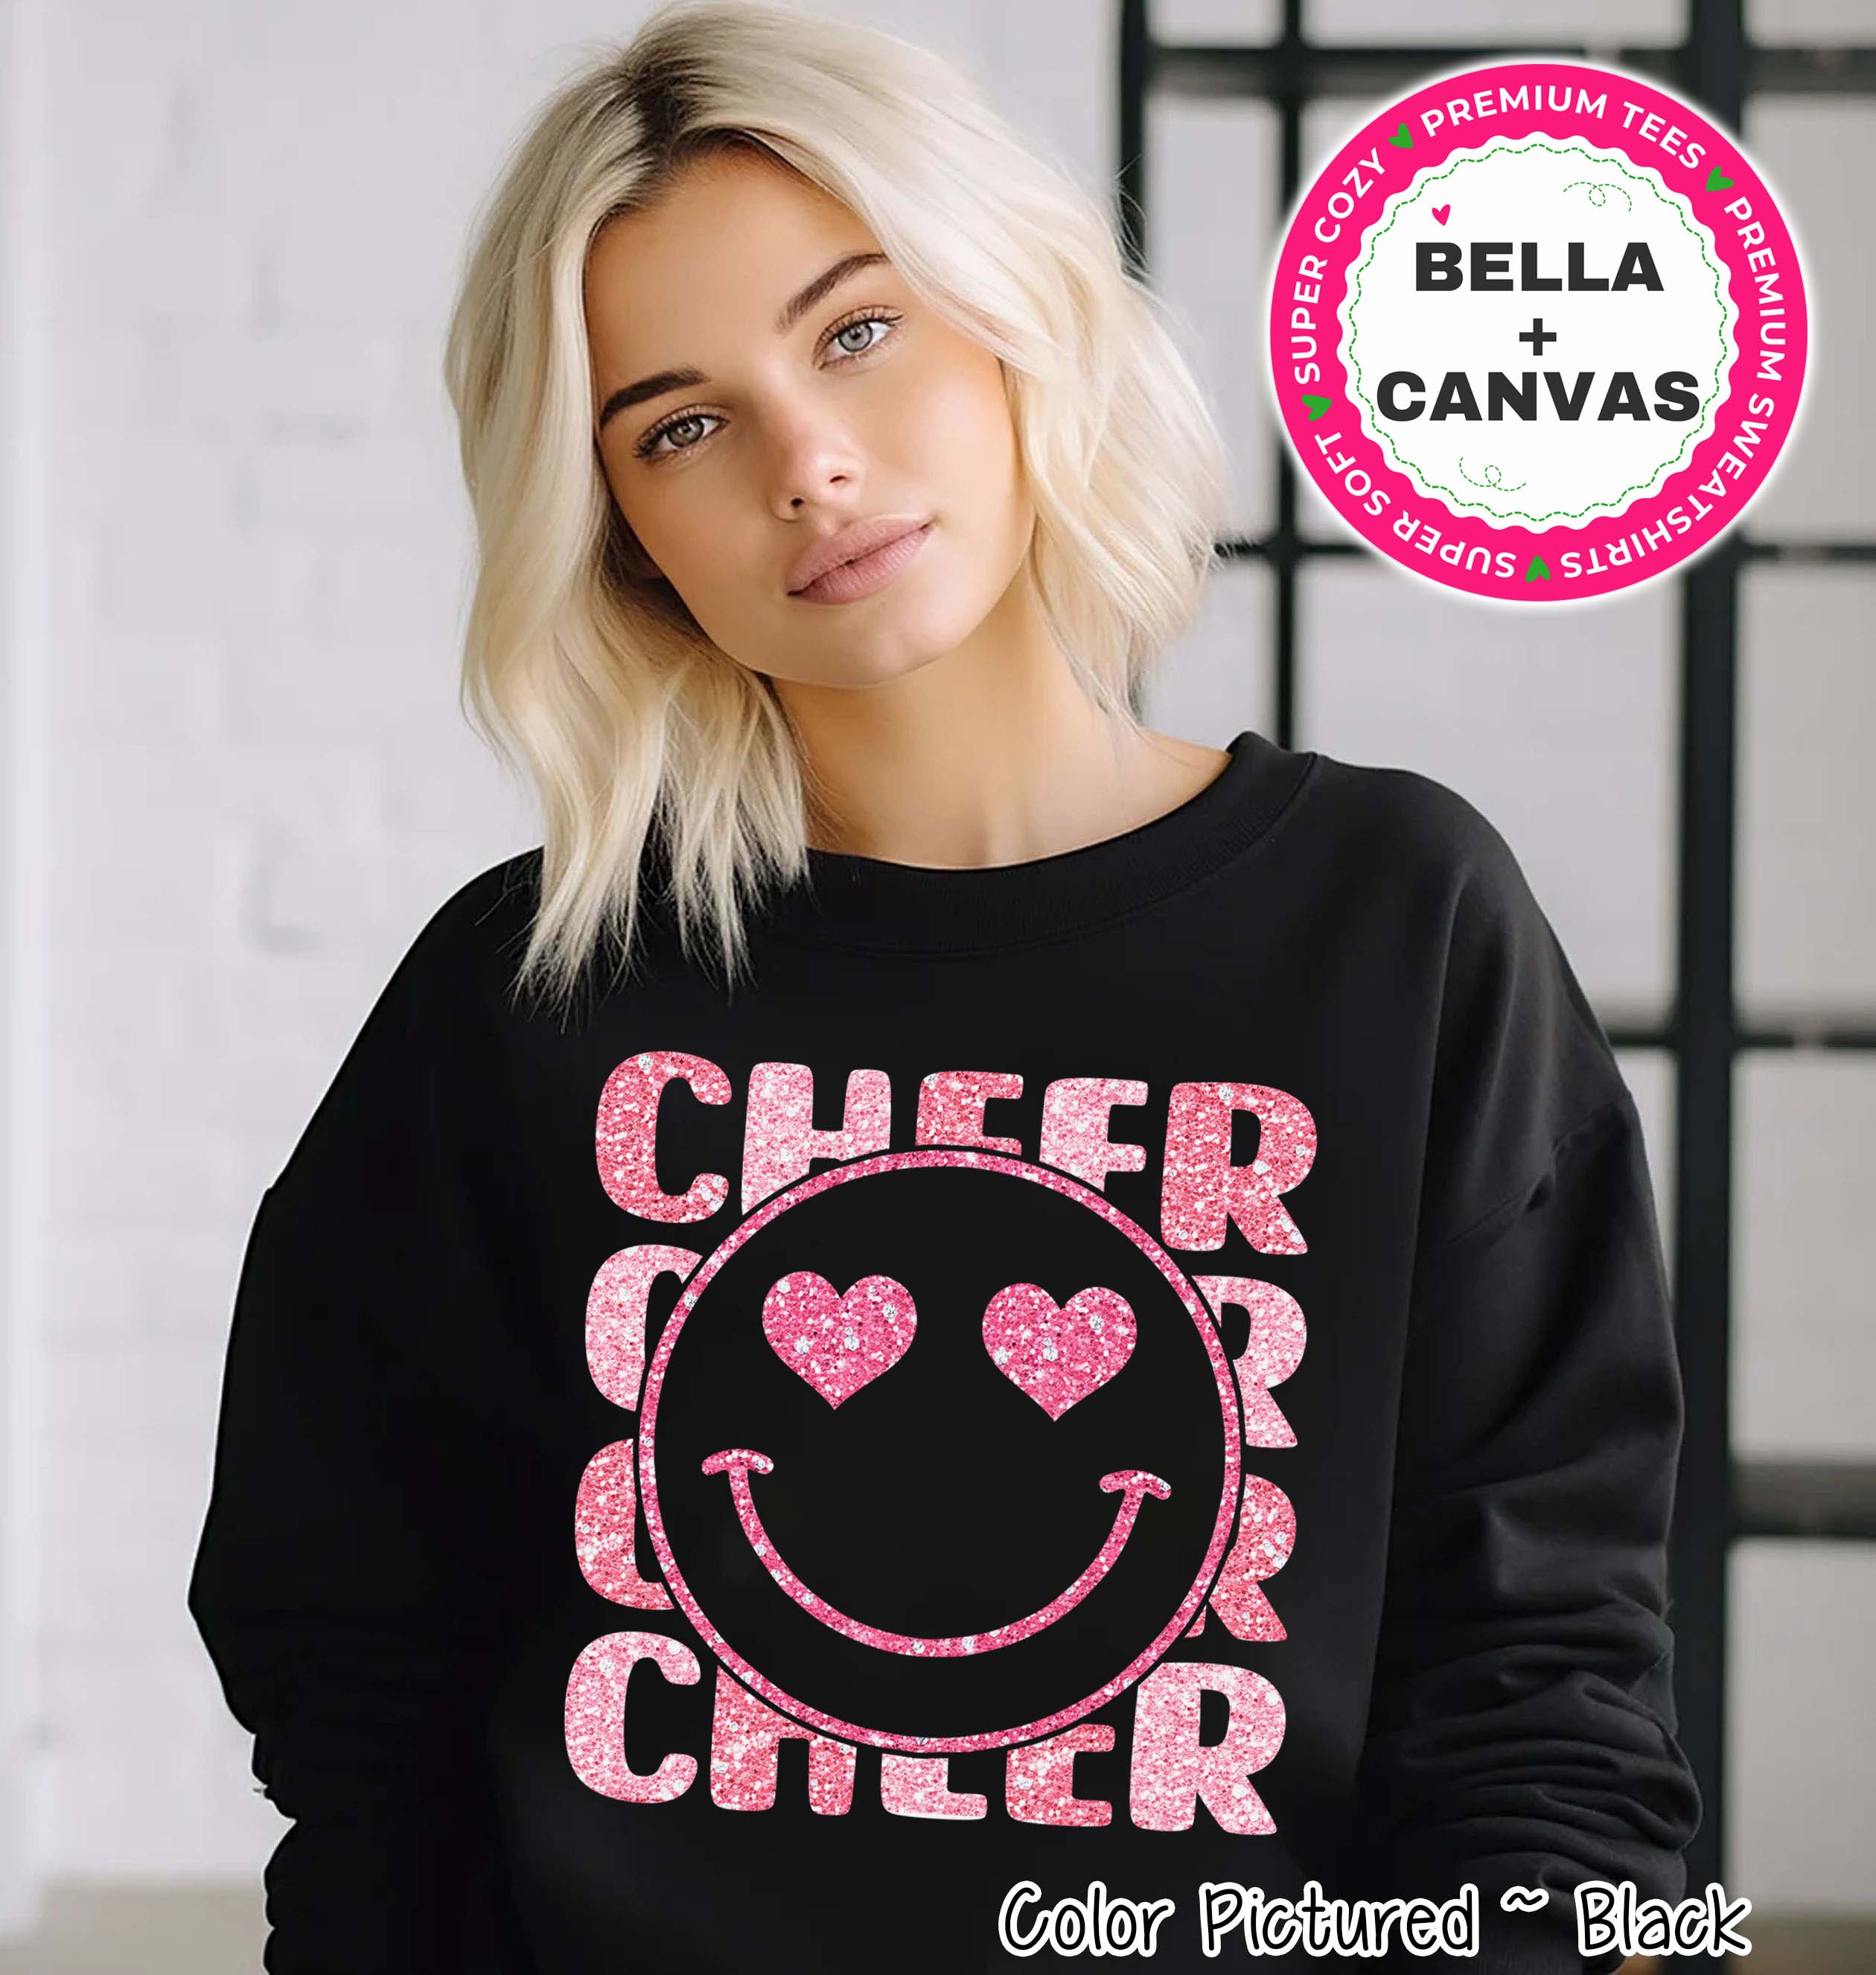 Faux Glitter Cheerleader Smile Preppy Valentine Tee or Sweatshirt